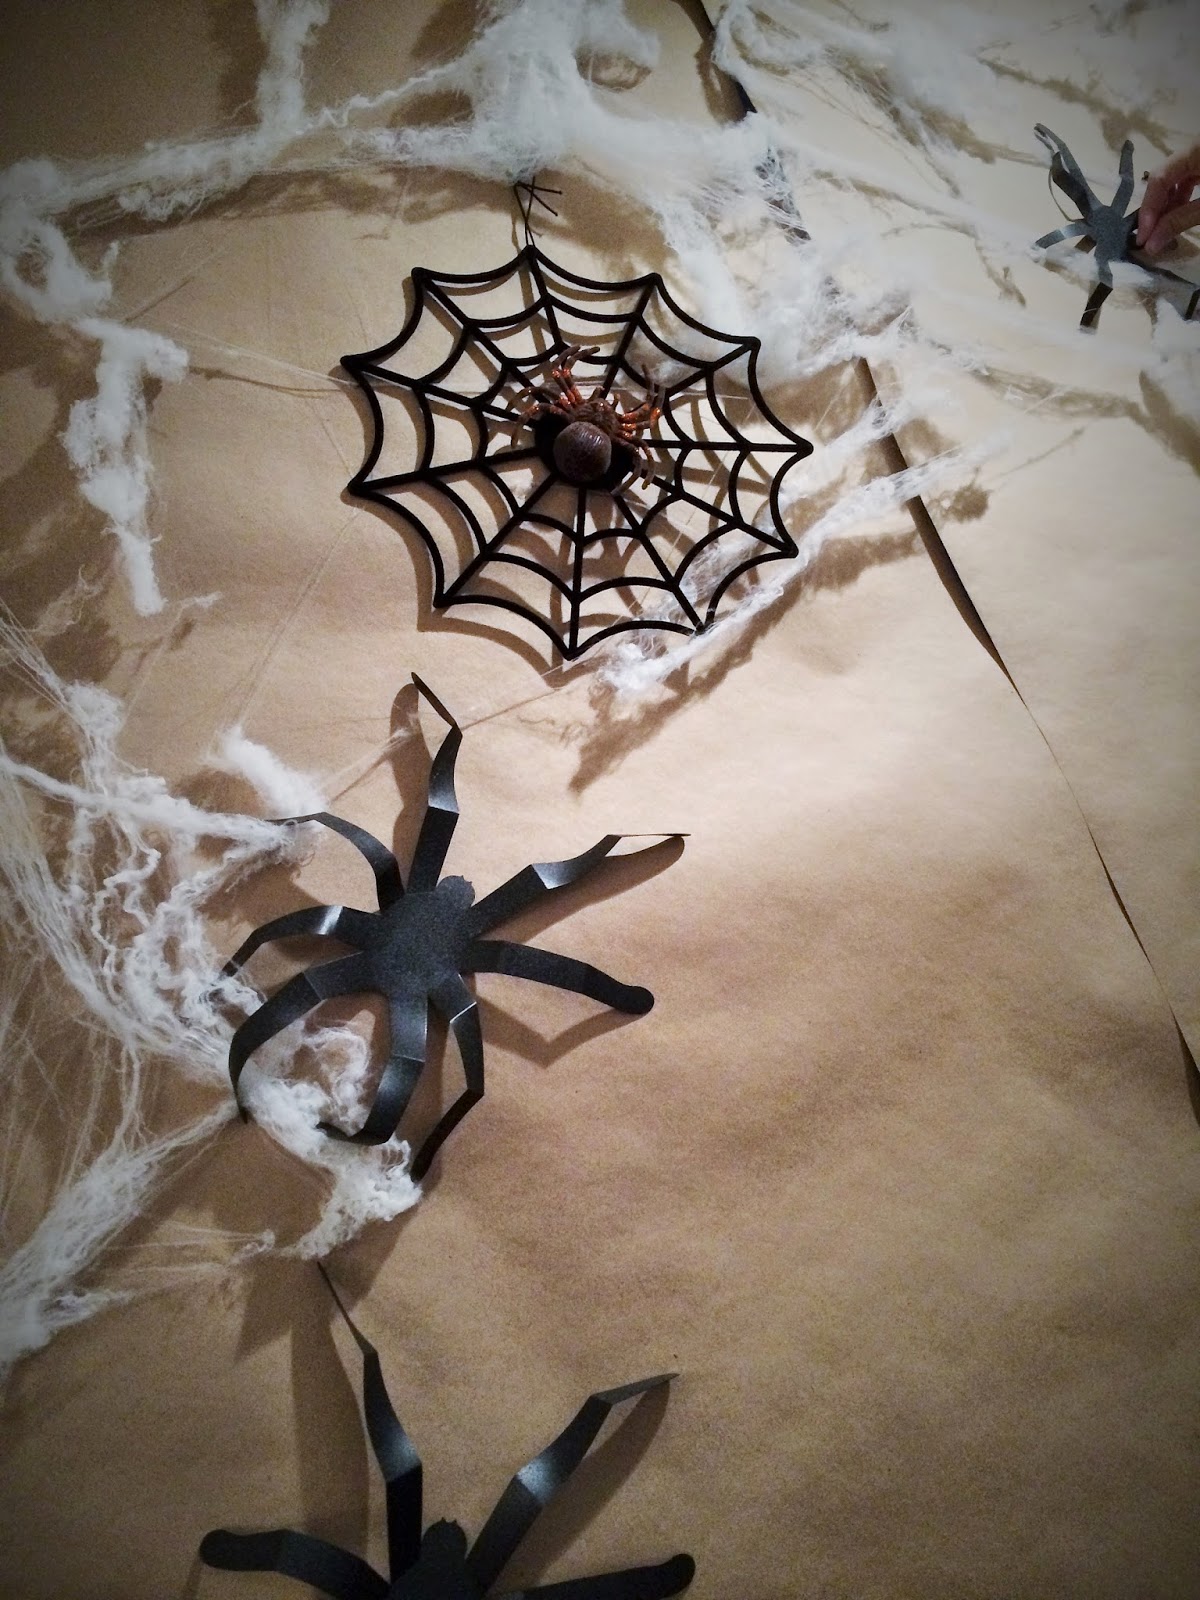 Spiders Halloween Decoration